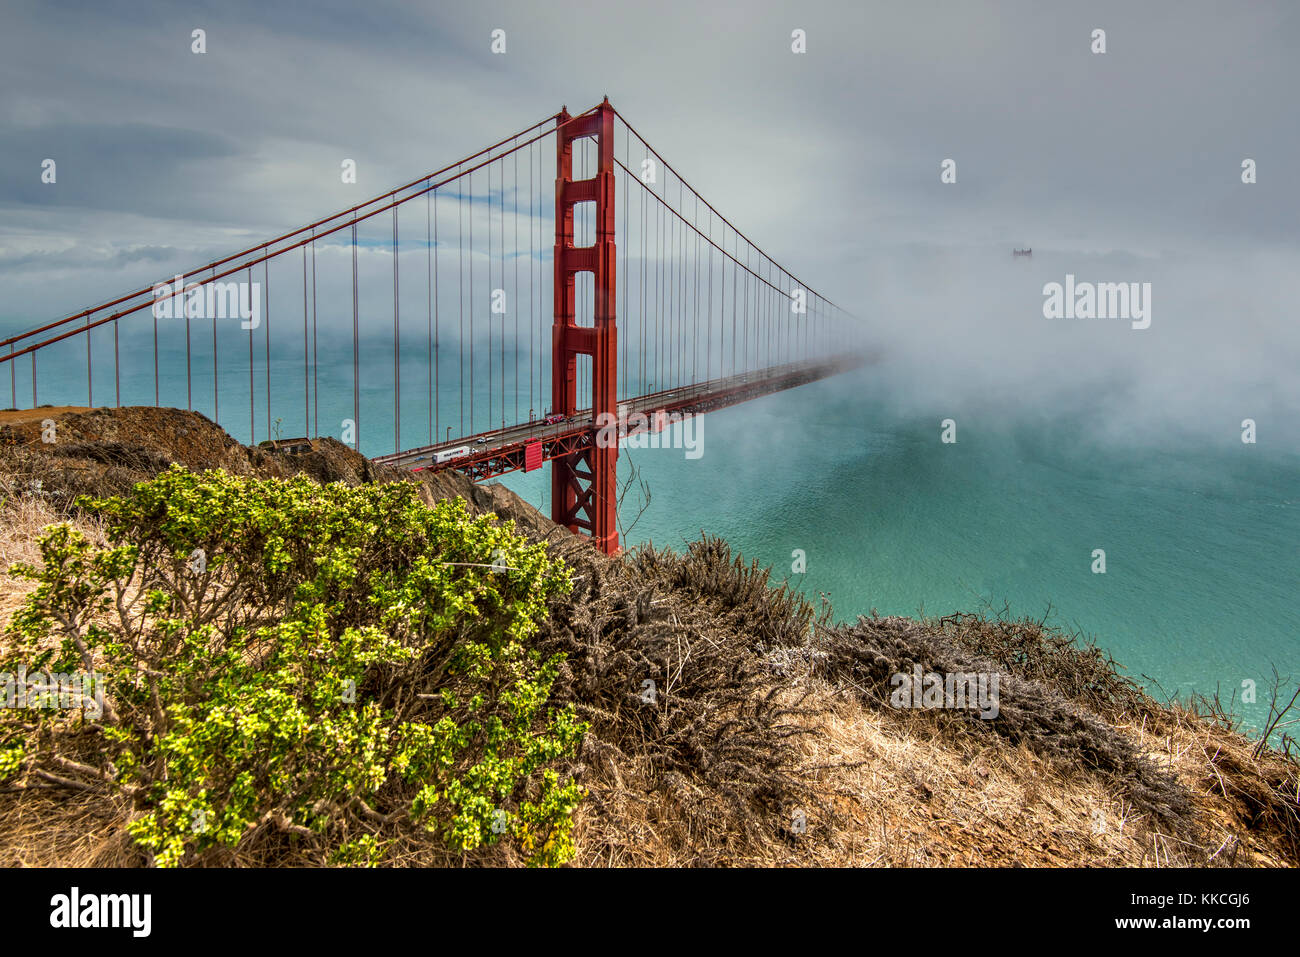 The Golden Gate Bridge in a foggy day, San Francisco, California, USA Stock Photo